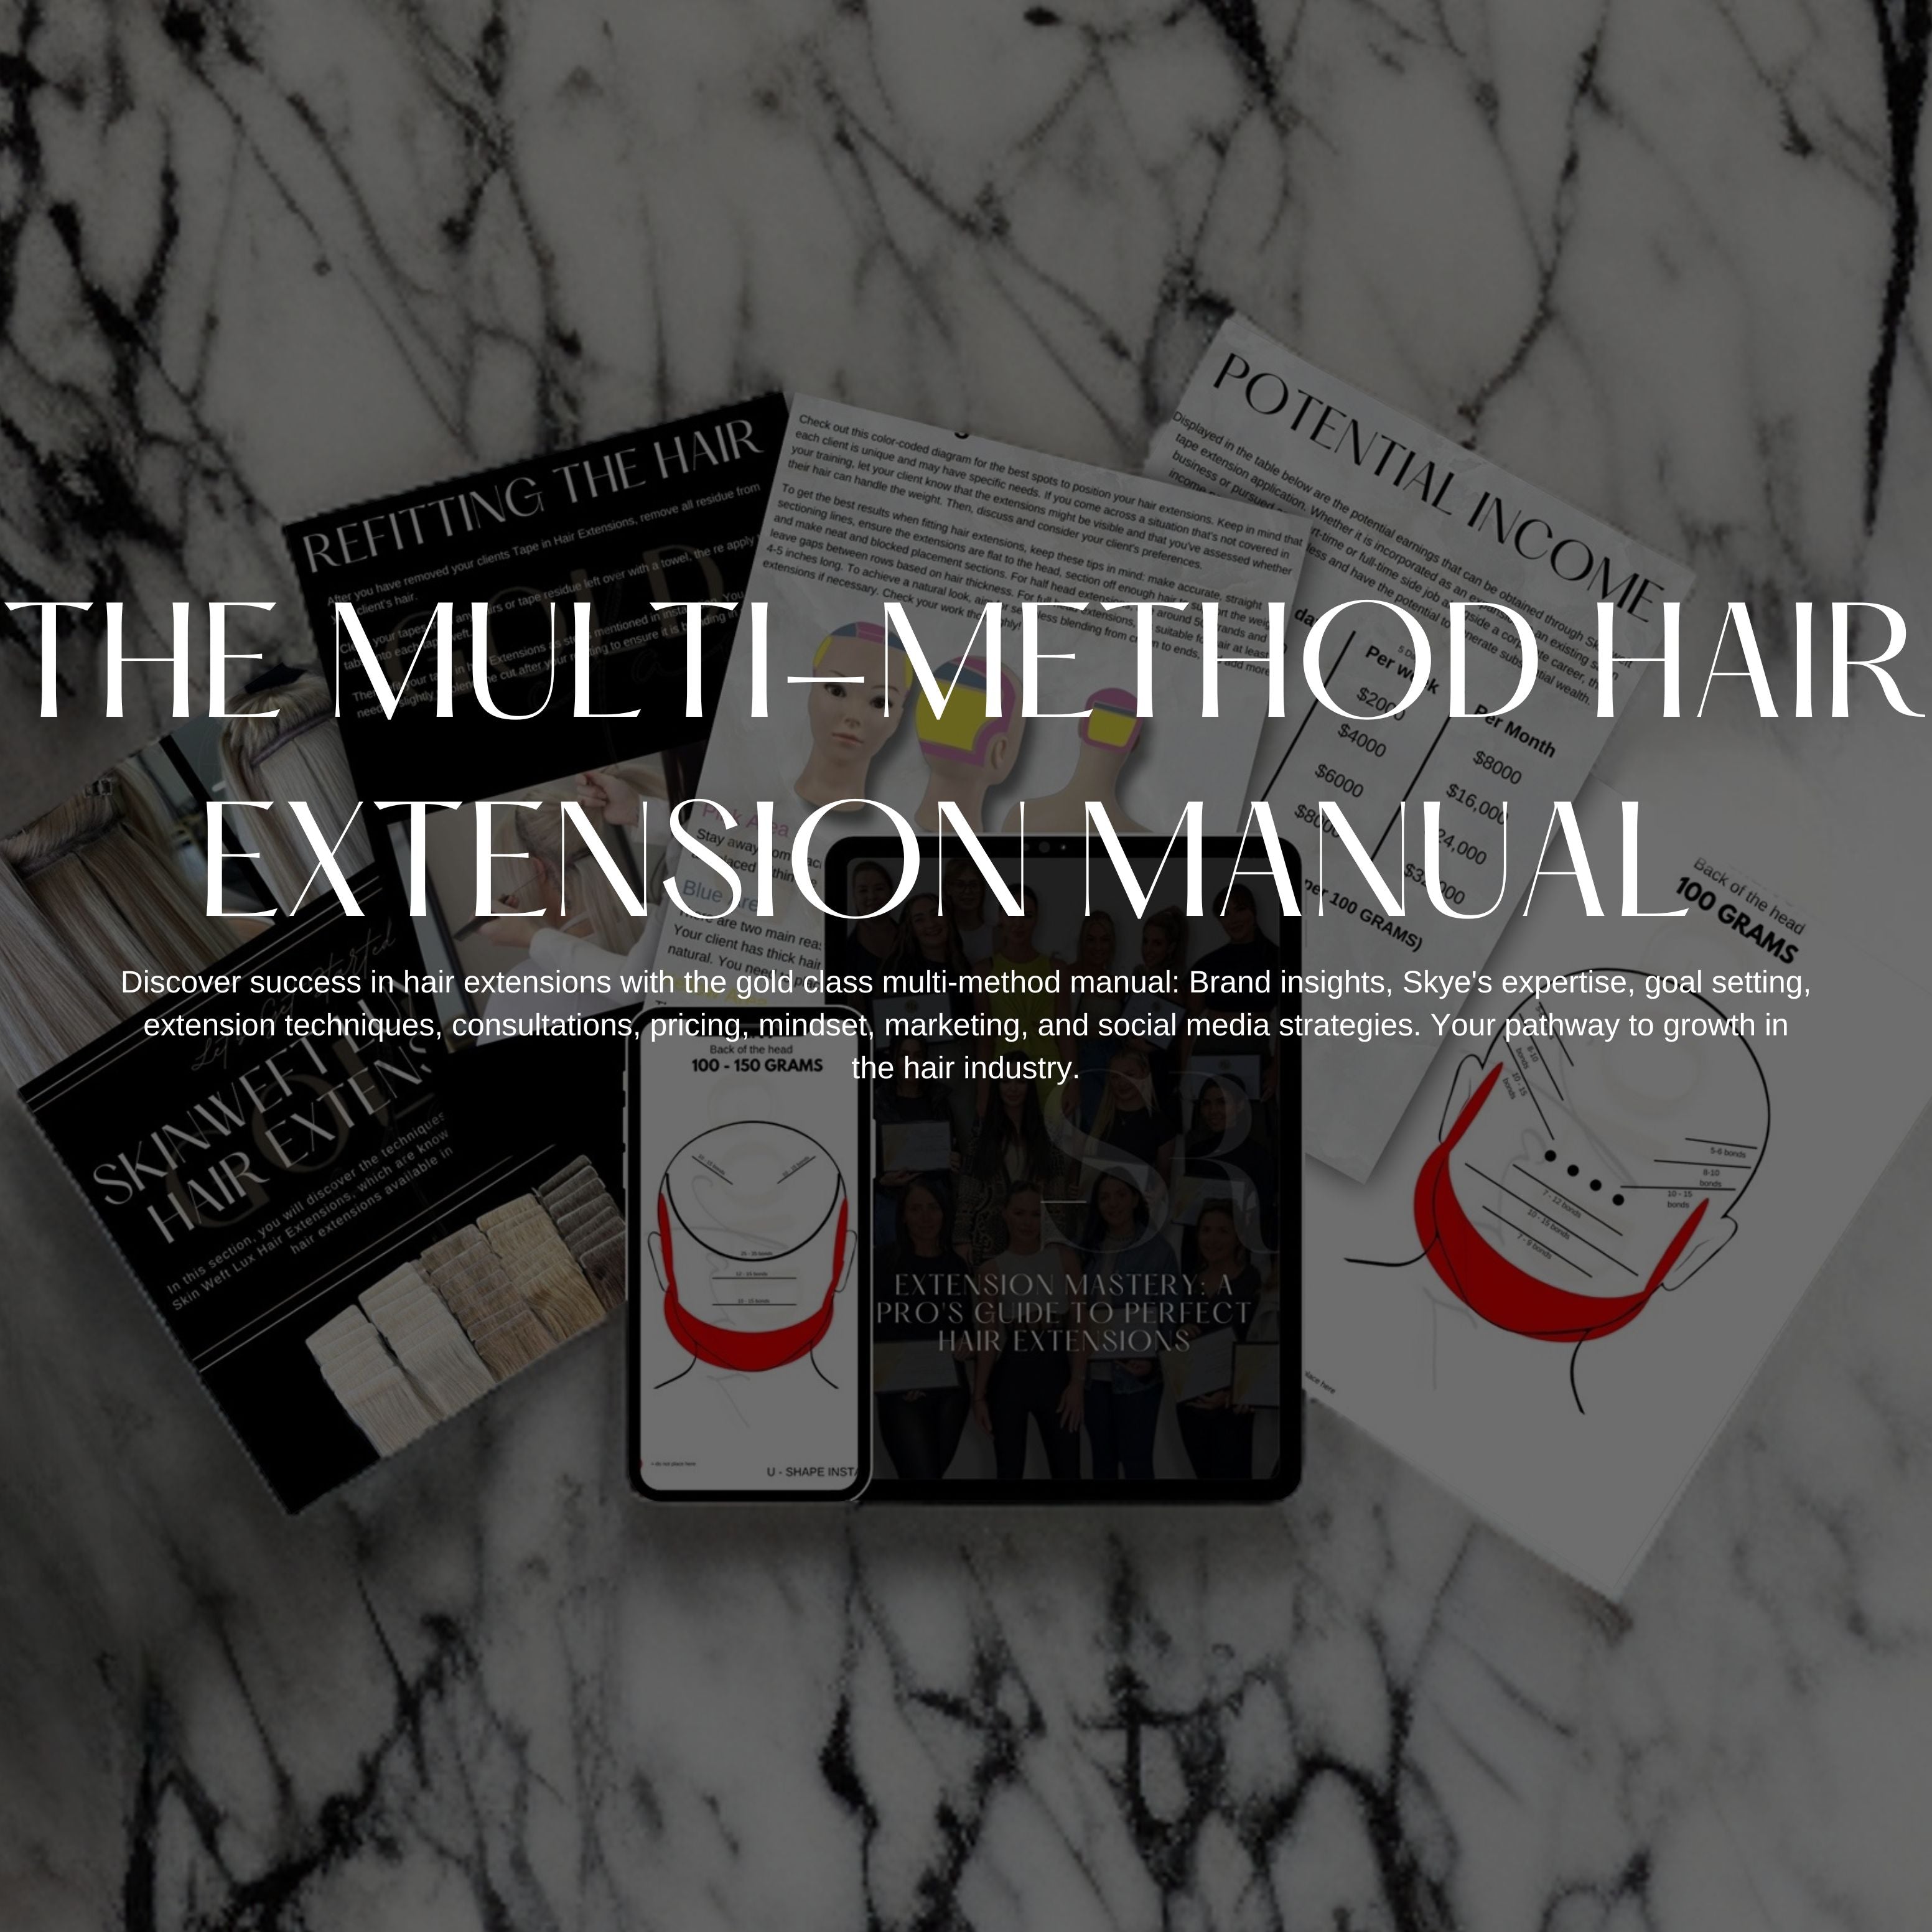 The multi method hair extension manual